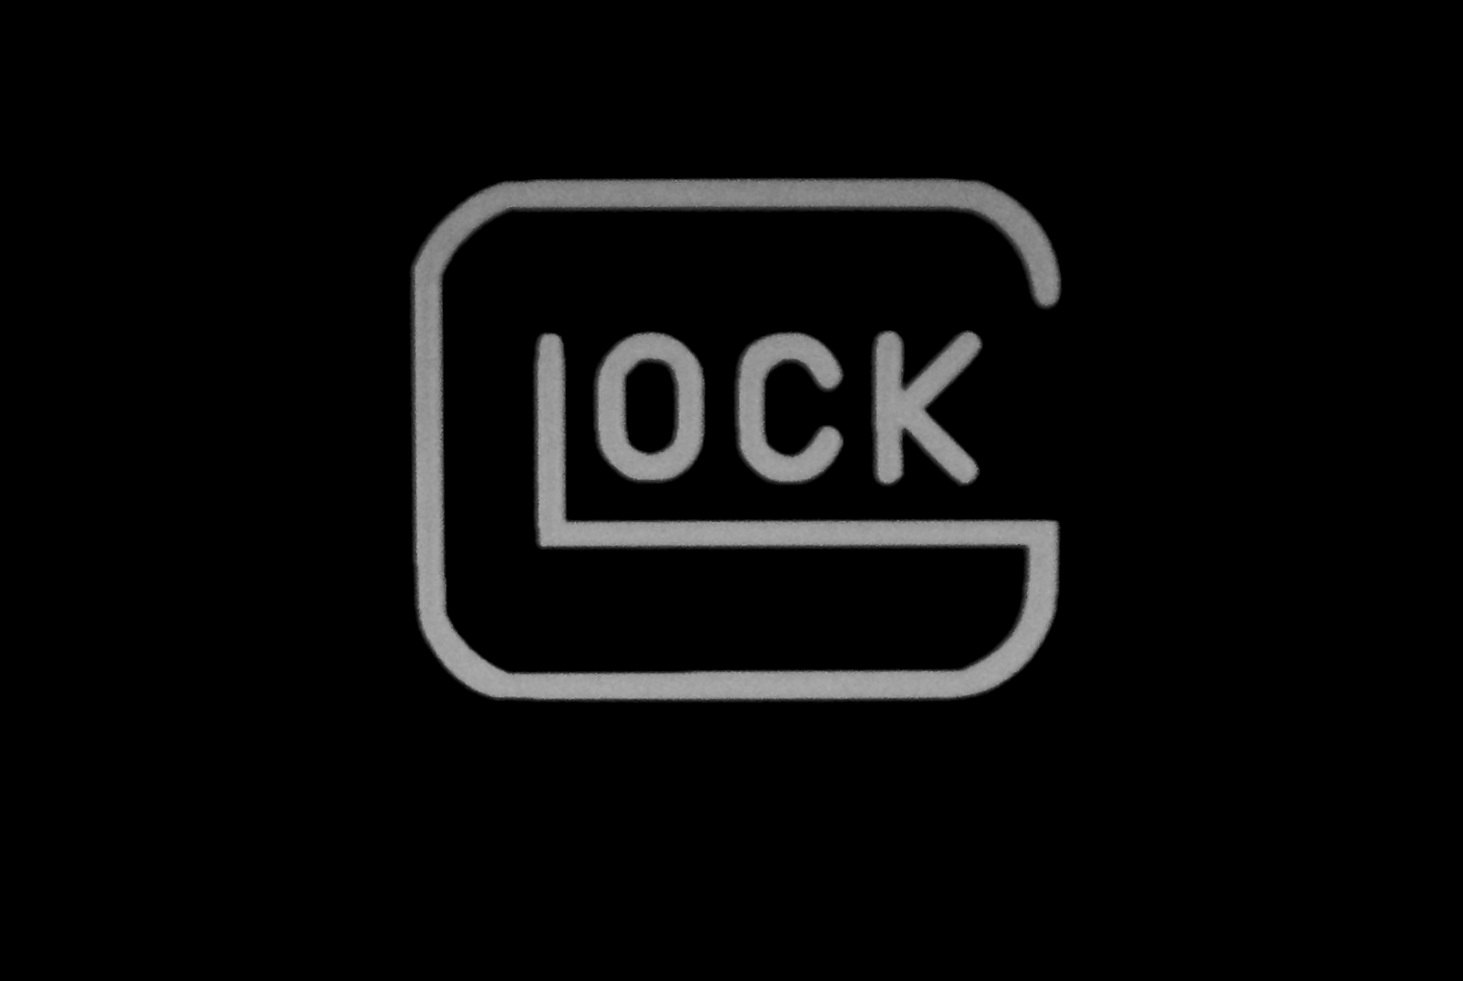 Glock Logo Wallpaper Glock logo wal 1463x981